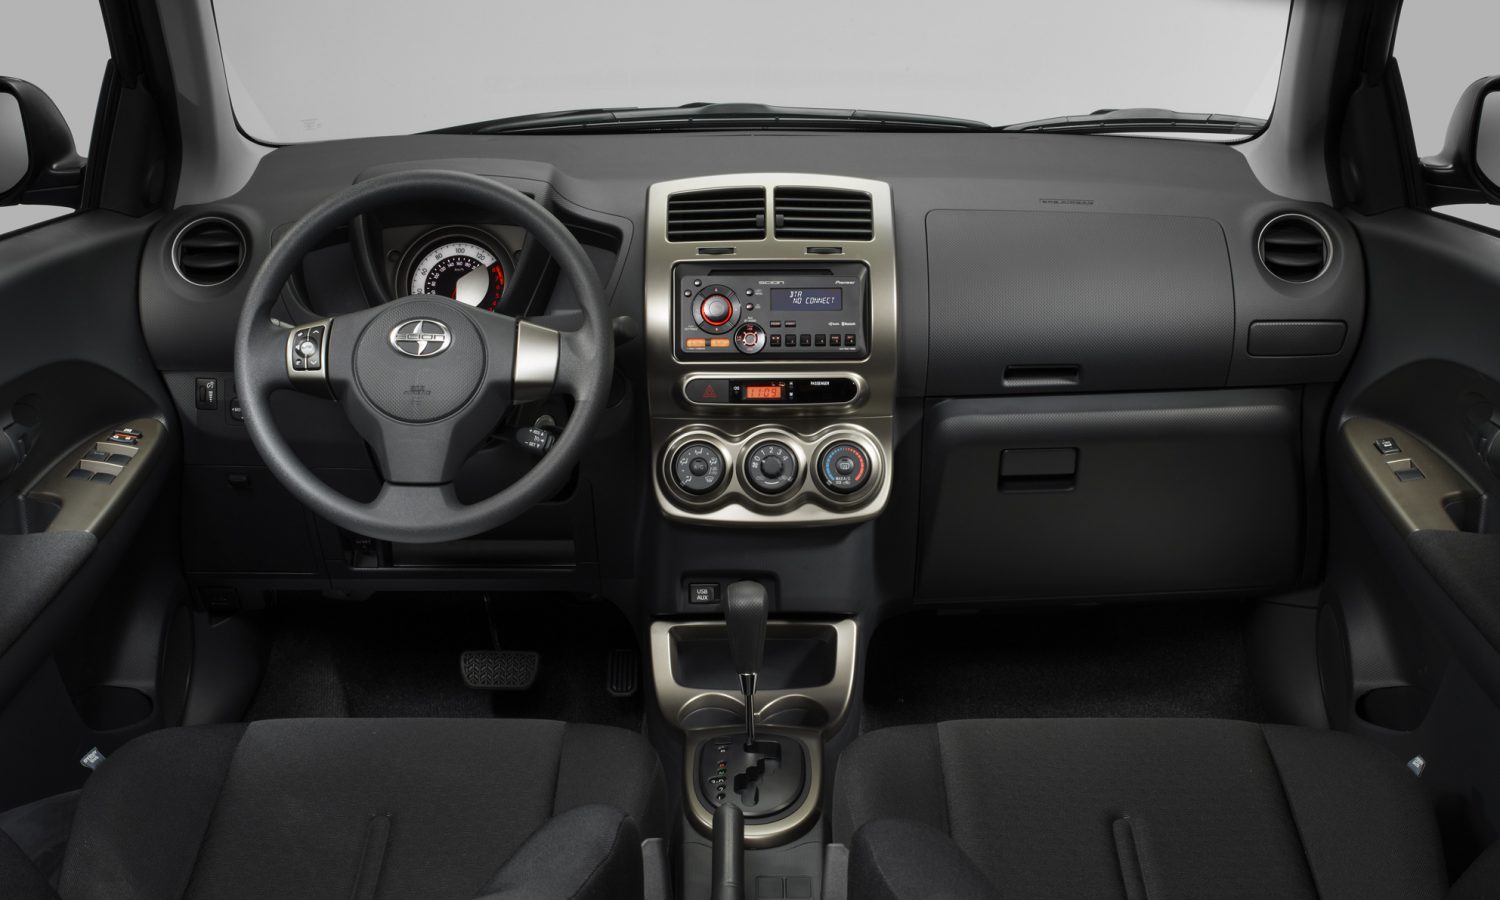 2013 - 2014 Scion xD 013 - Toyota USA Newsroom